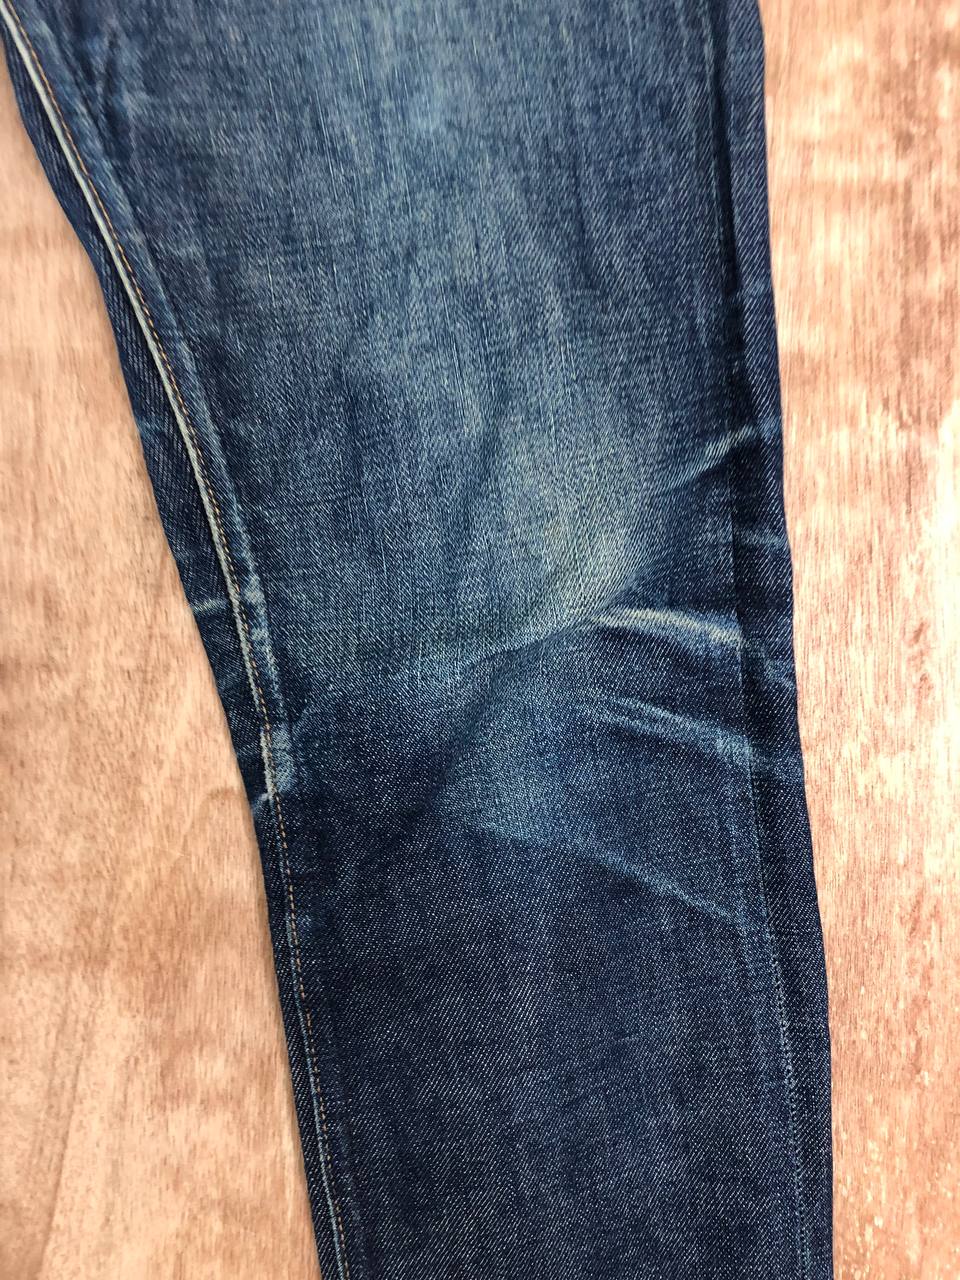 APC Petit Standard Jeans Distressed Selvedge - 6